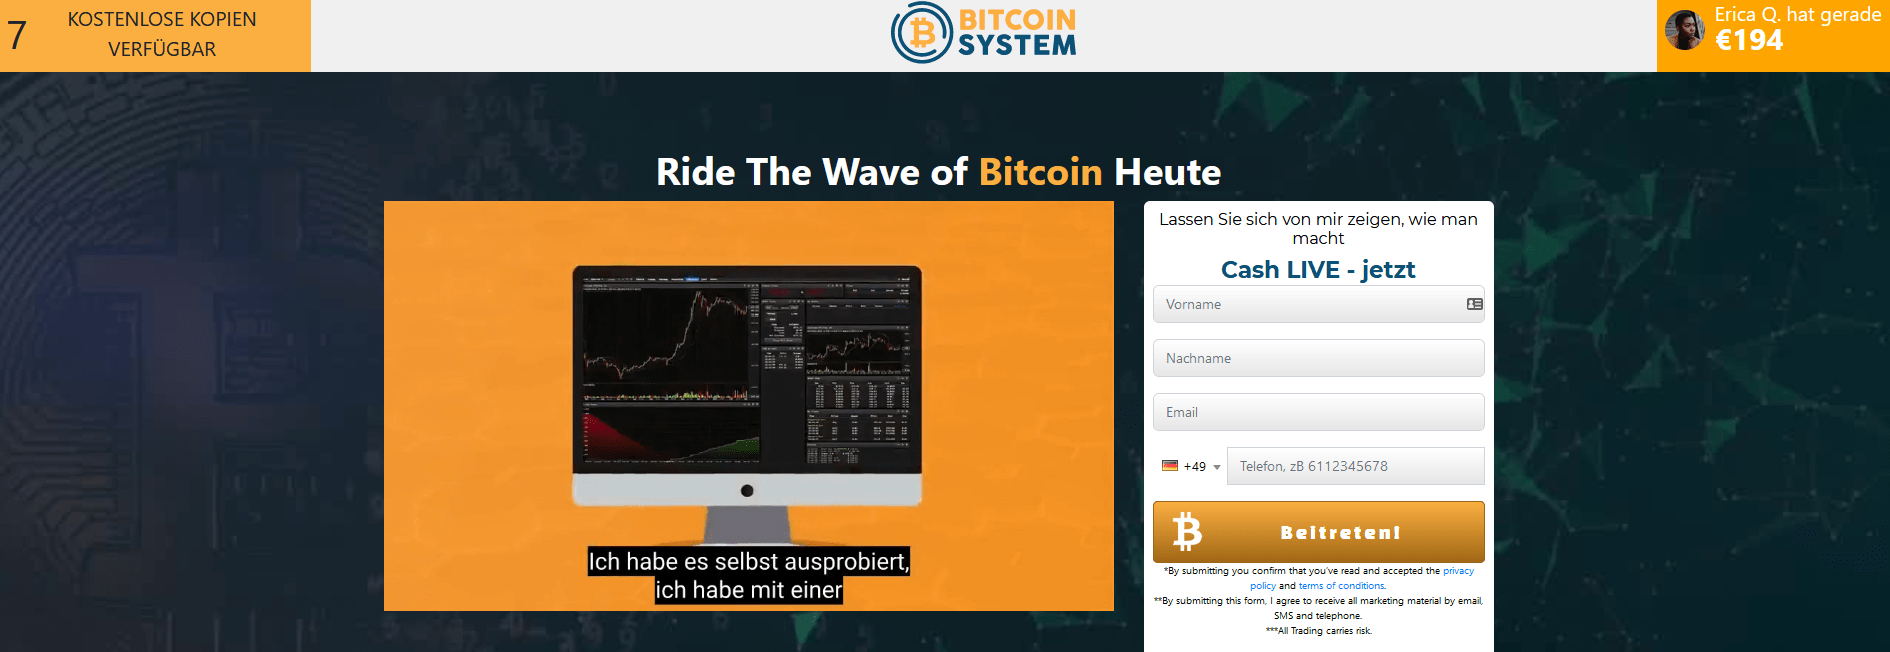 Bitcoin System Test